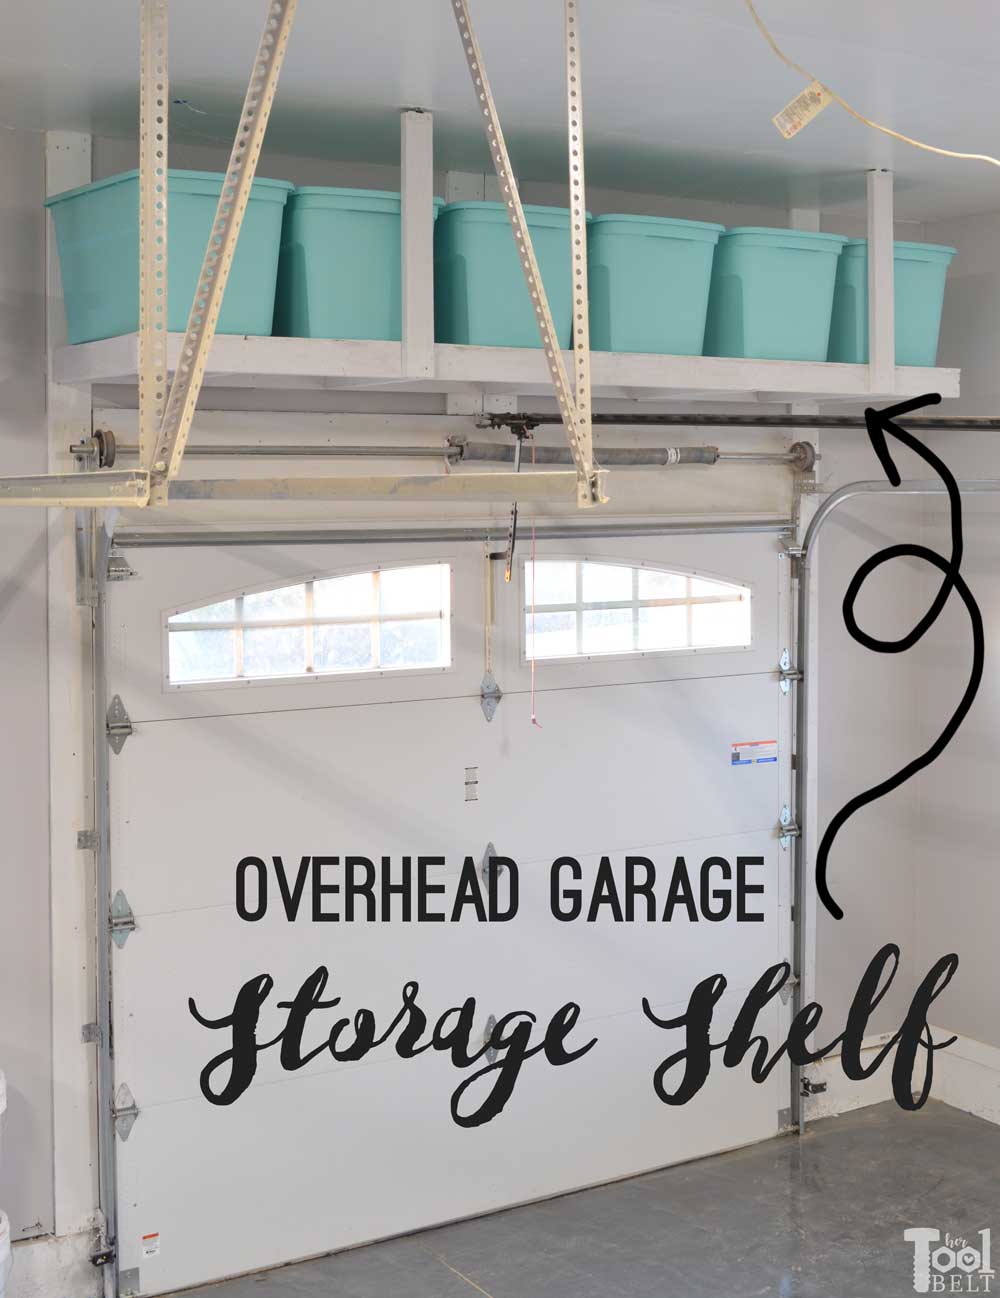 Overhead Garage Storage Shelf - Her Tool Belt